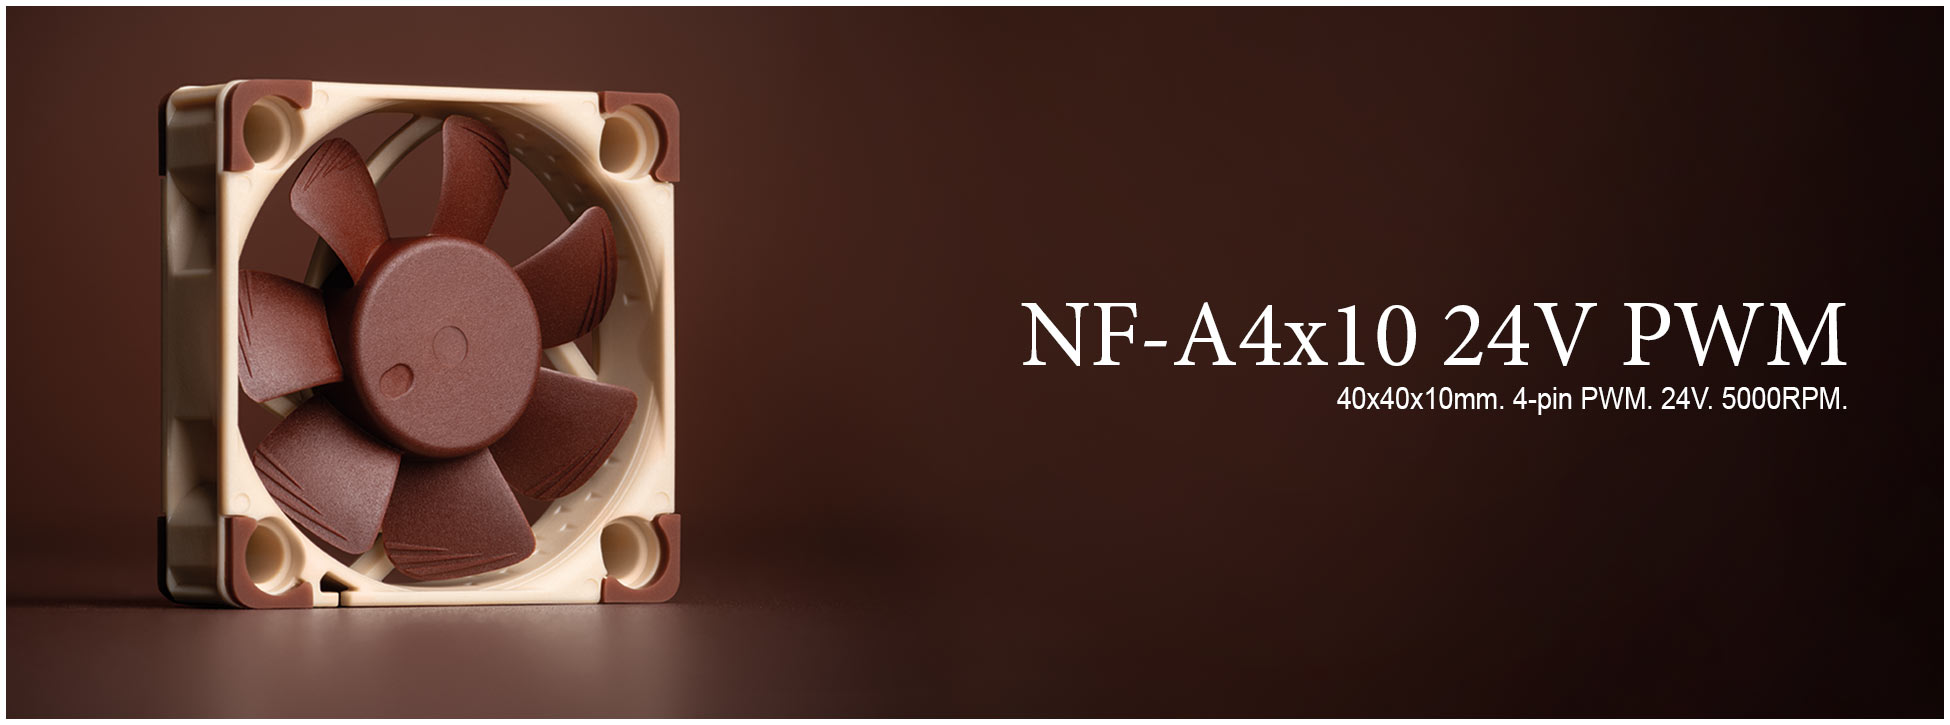 NF-A4x10 24V : un ventilateur Noctua alimenté en 24V ! 